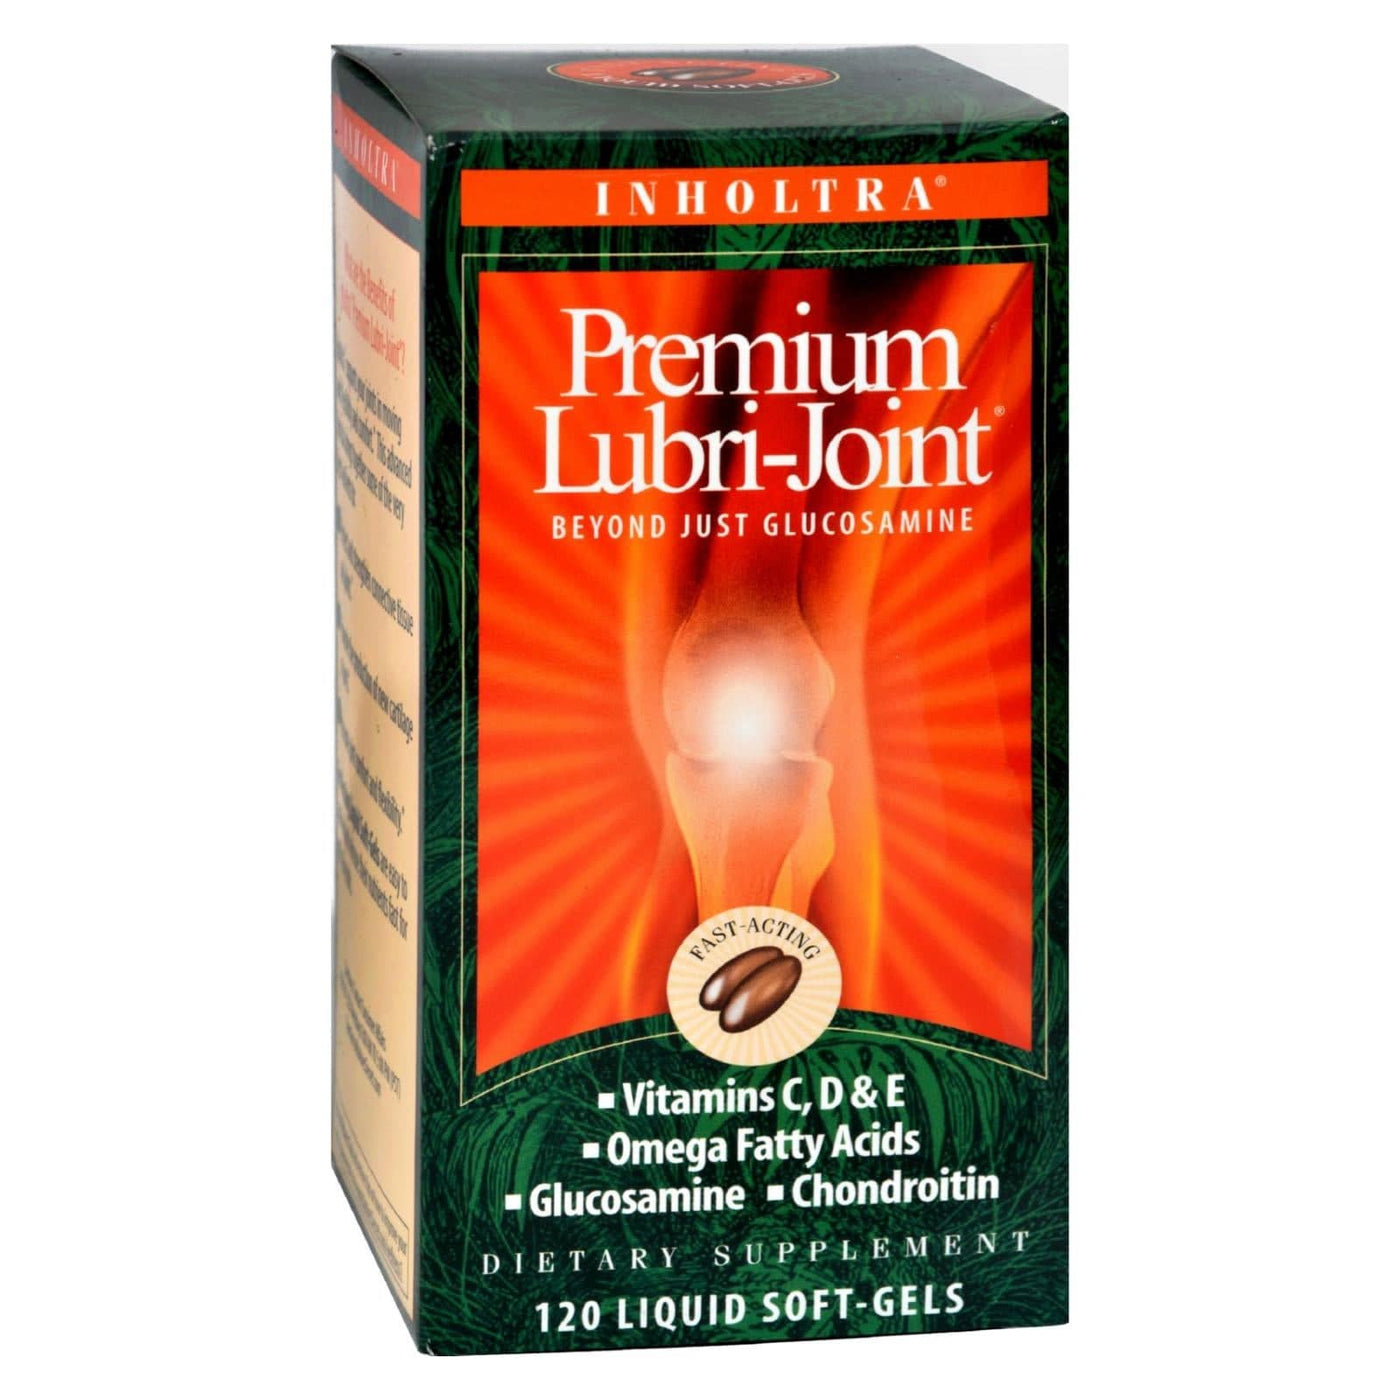 Inholtra Premium Lubri-joint - 120 Gelatin Capsules | OnlyNaturals.us